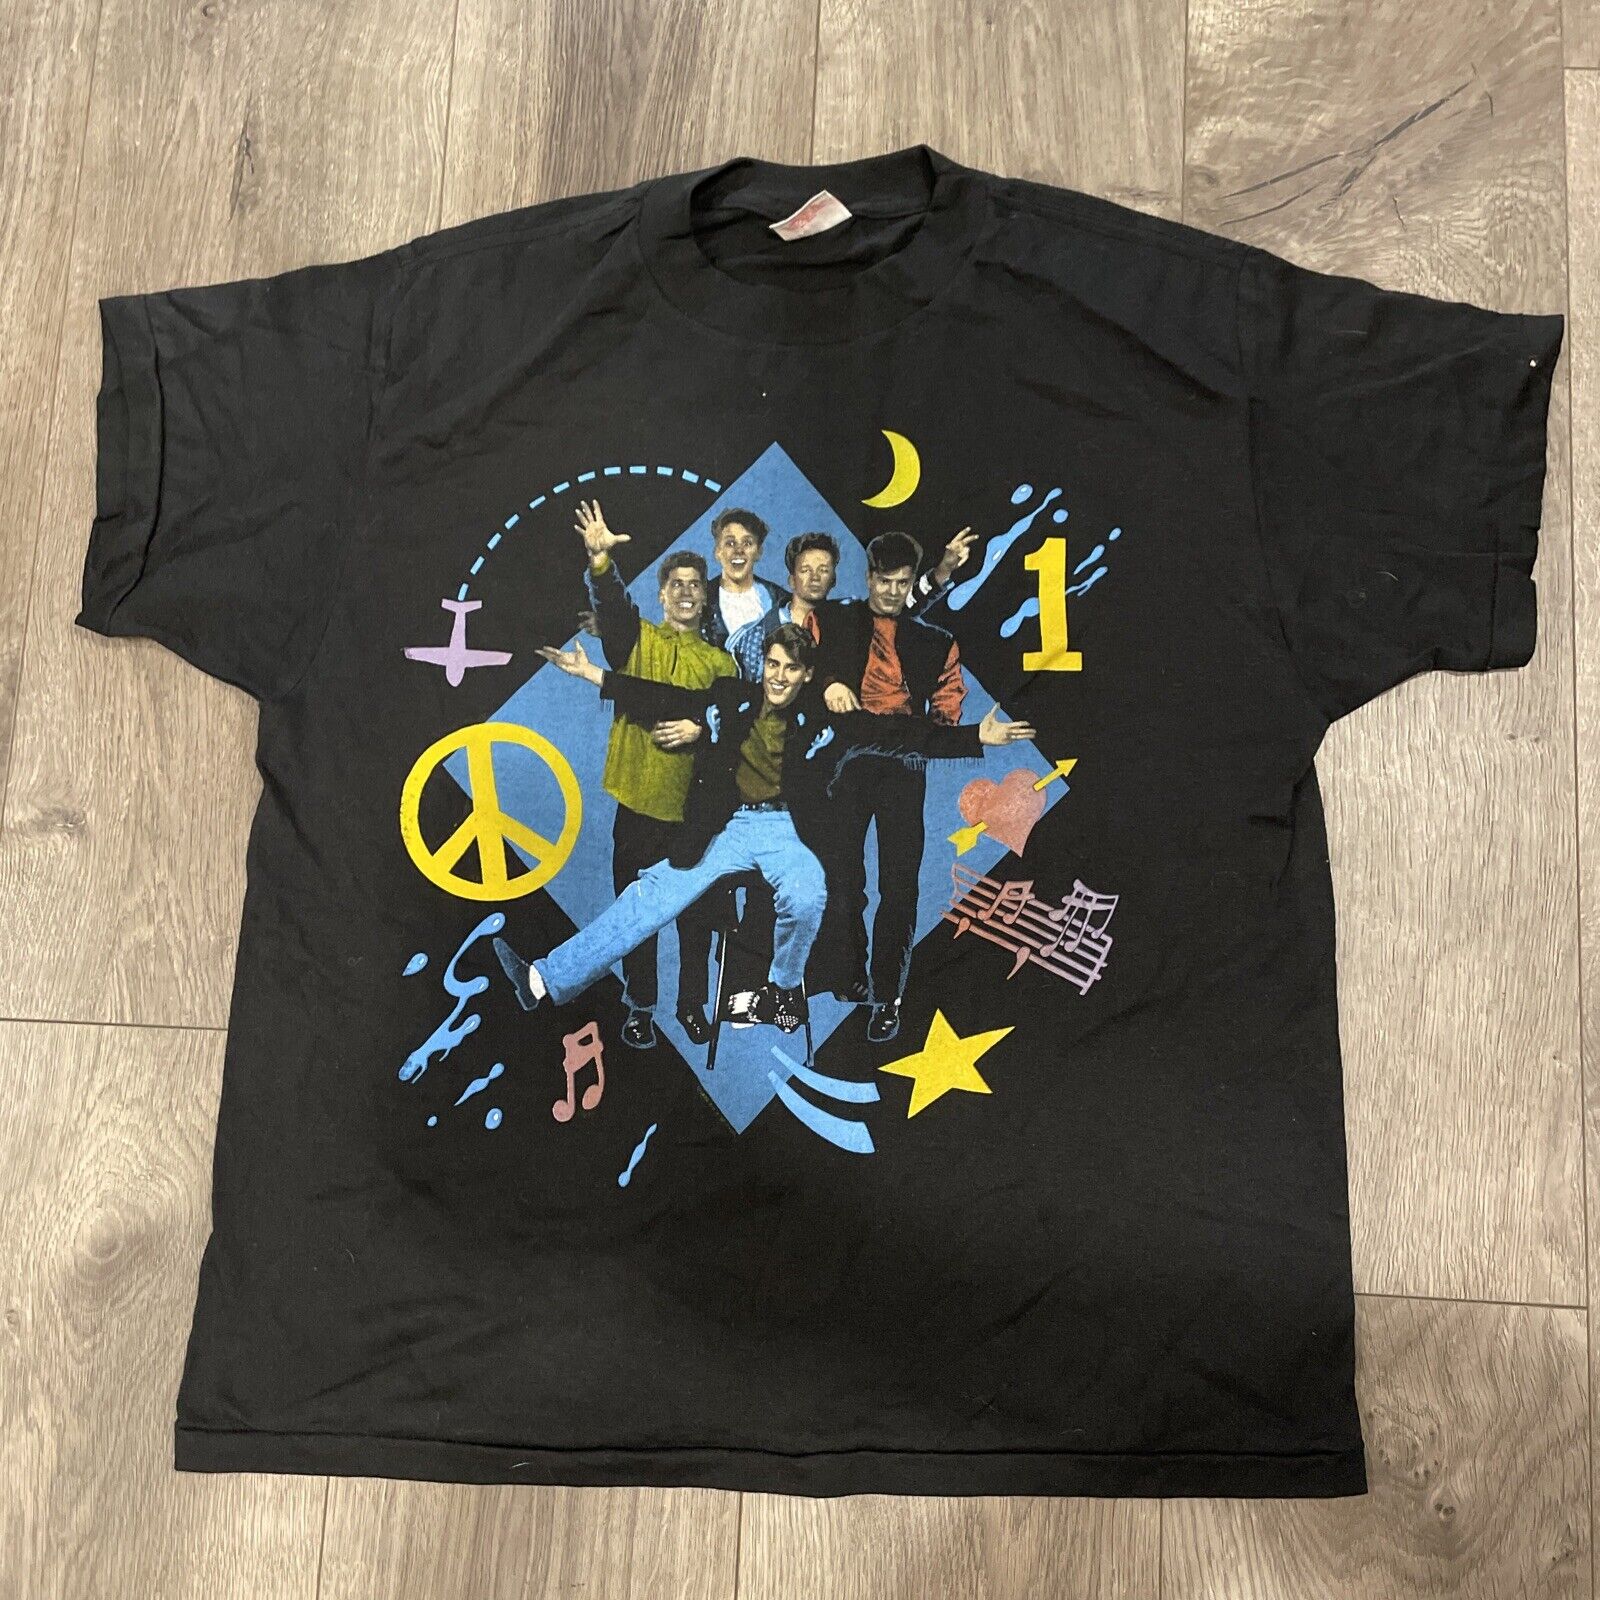 1990 Single Stitch New Kids On The Block Official Tour Shirt NKOTB Large Royal